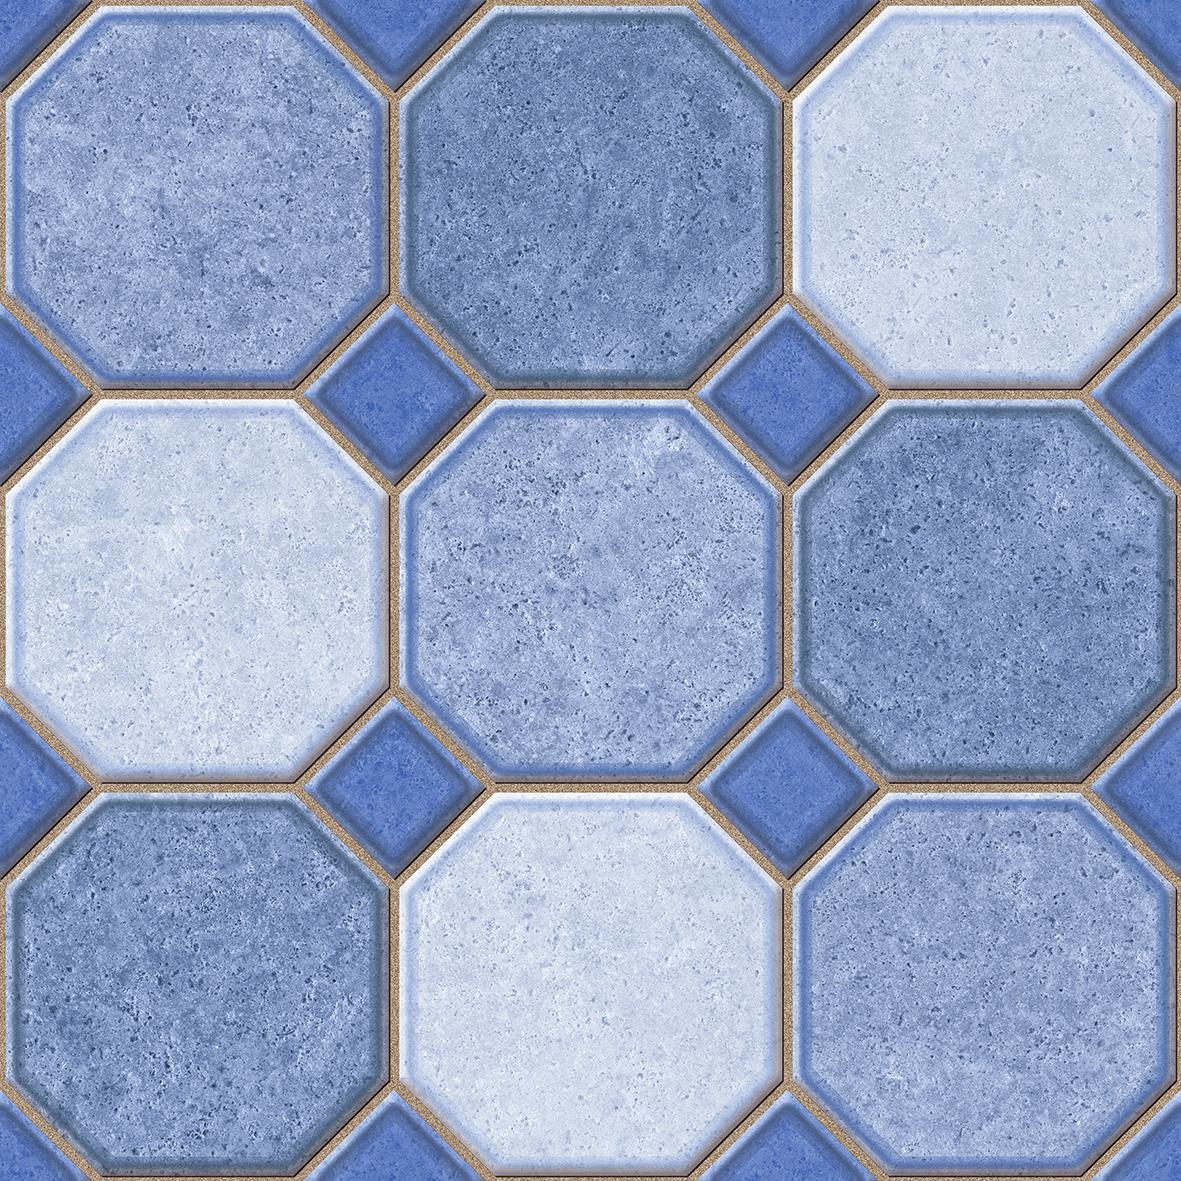 Blue Tiles for Balcony Tiles, Parking Tiles, Terrace Tiles, Pathway Tiles, High Traffic Tiles, Commercial/Office, Outdoor Area